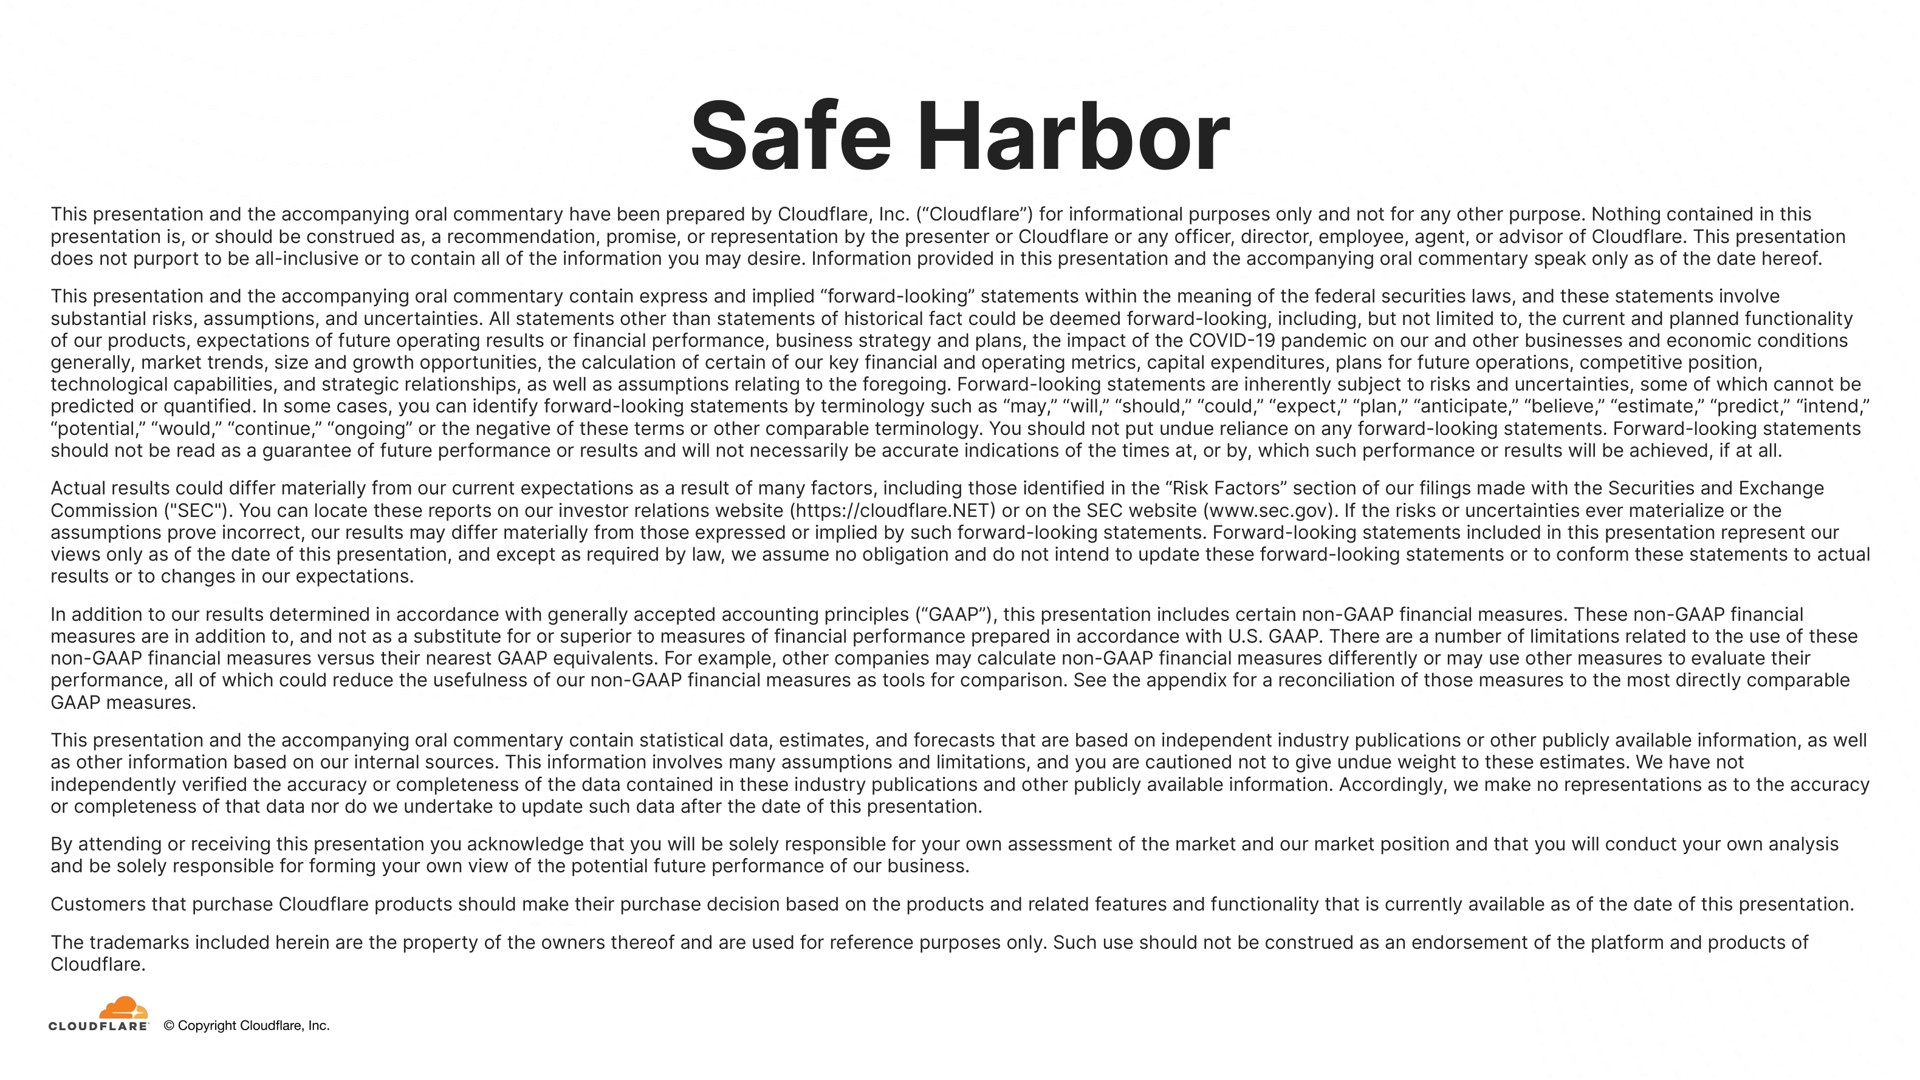 safe harbor | Cloudflare